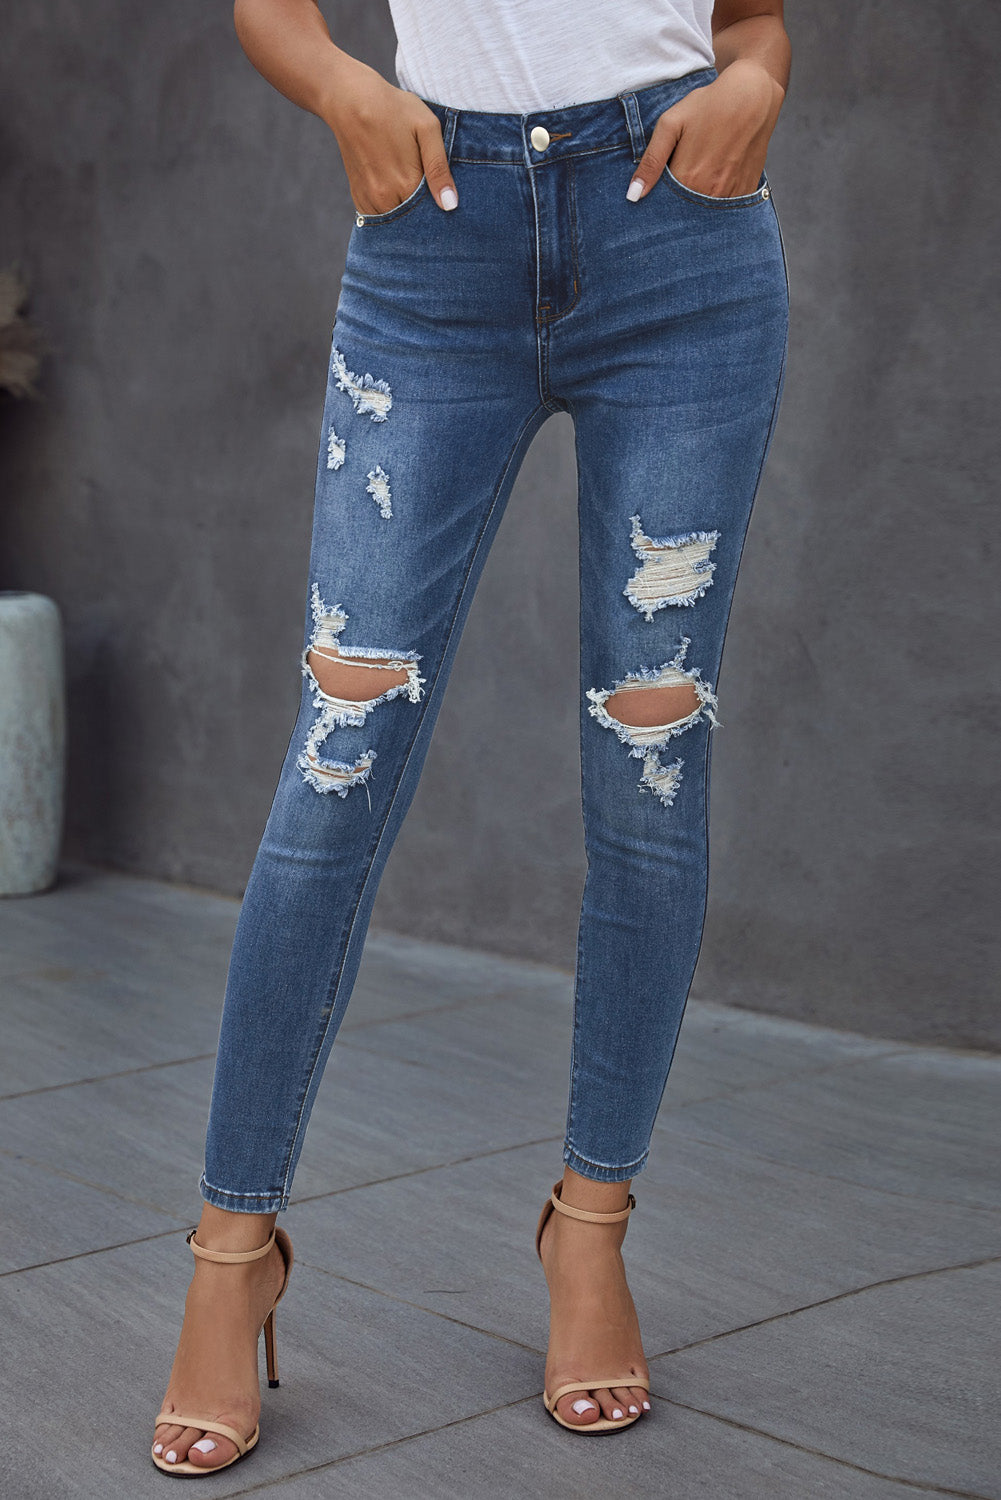 Vintage Skinny Ripped Jeans - Bit of Swank